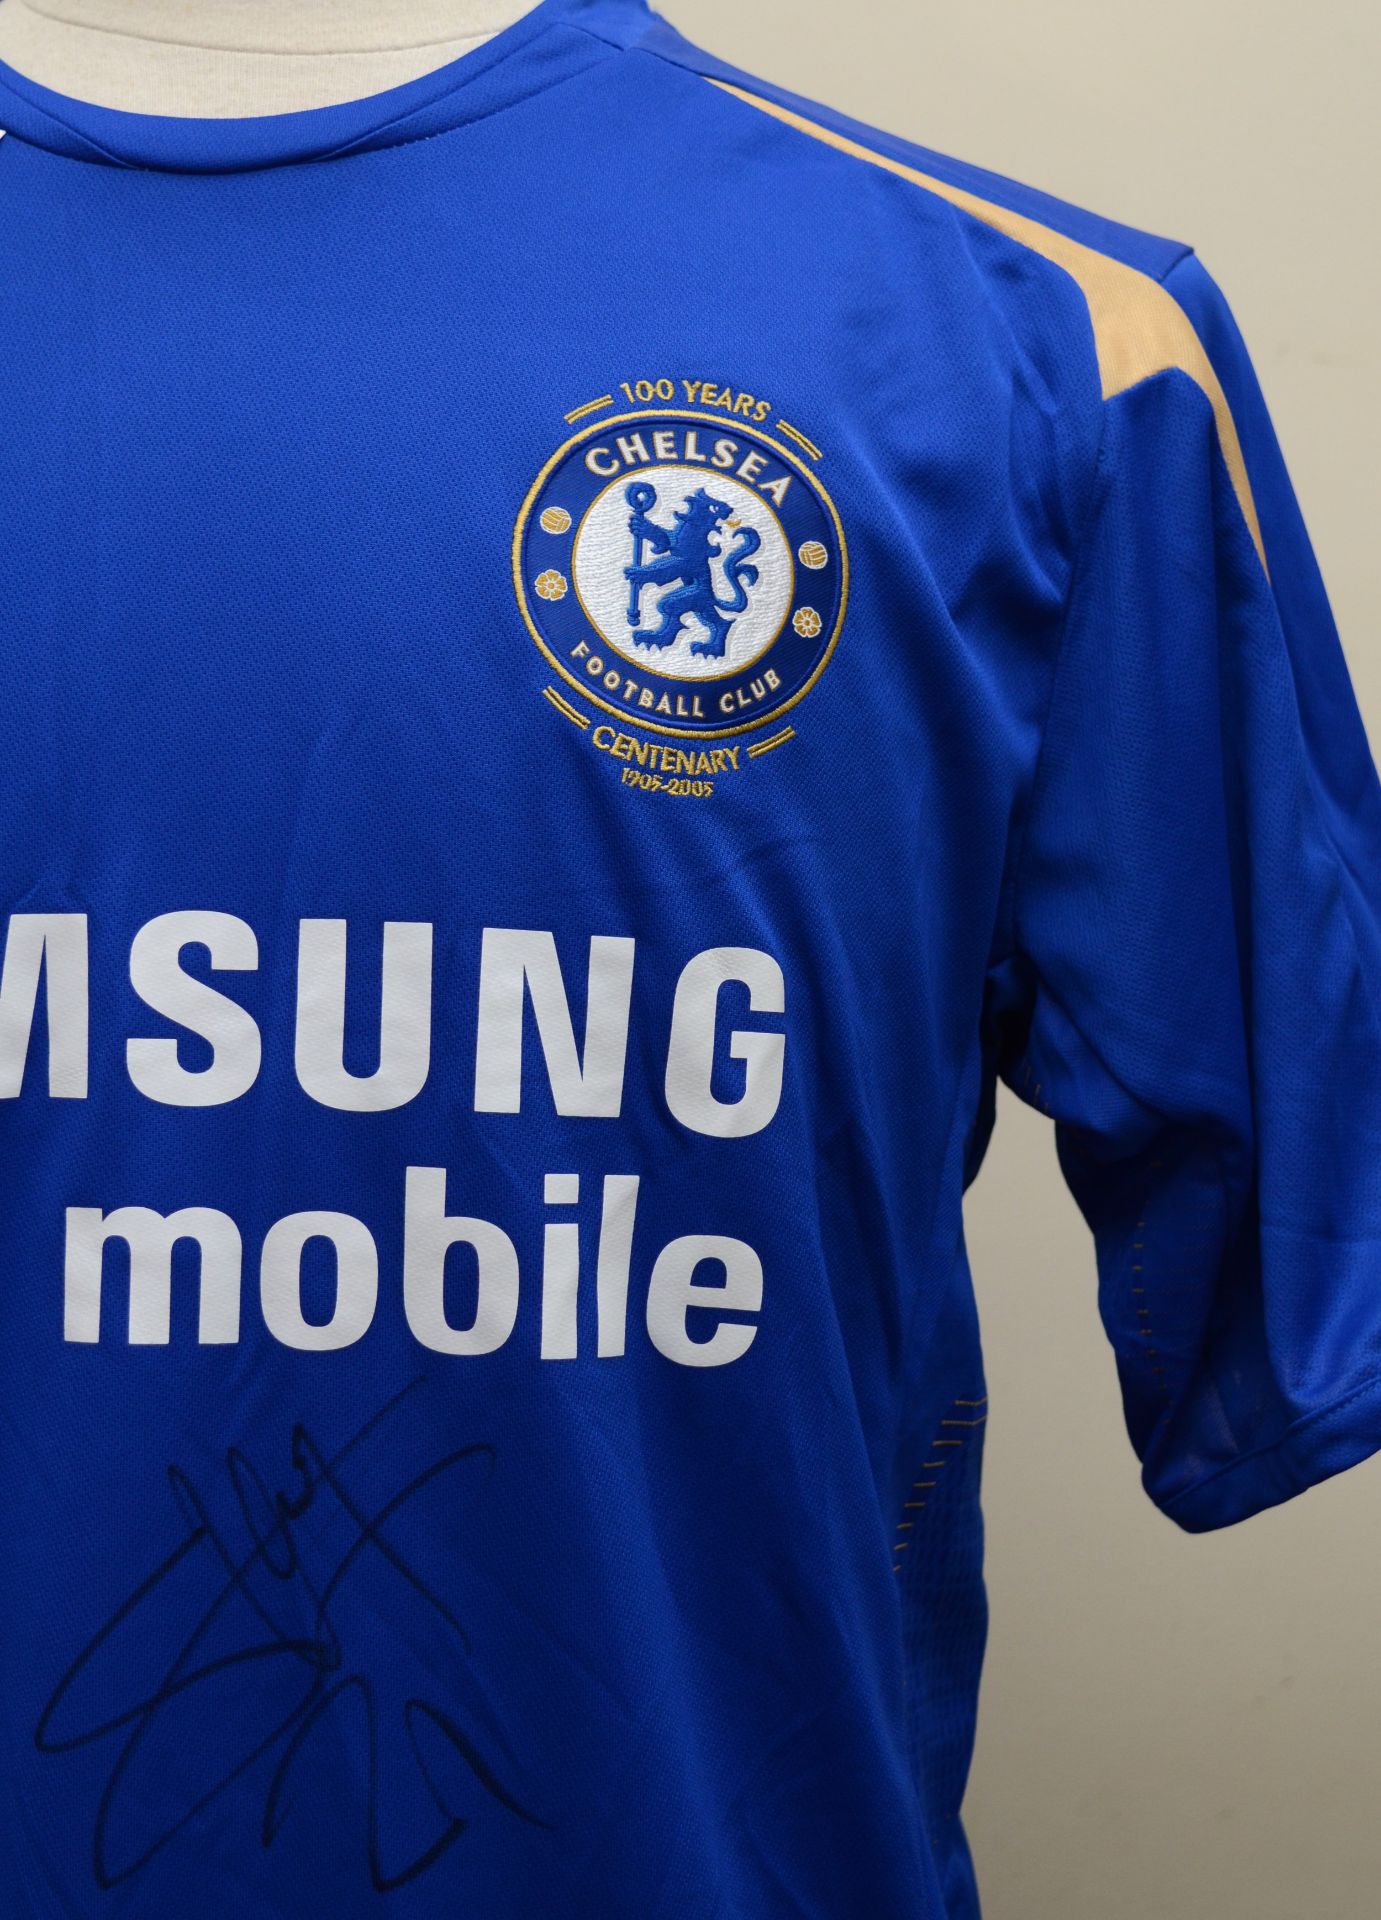 Chelsea Players Signed Shirt 2005-2006 Large Centenary Premier League winning season Jose Mourinho - Image 3 of 7